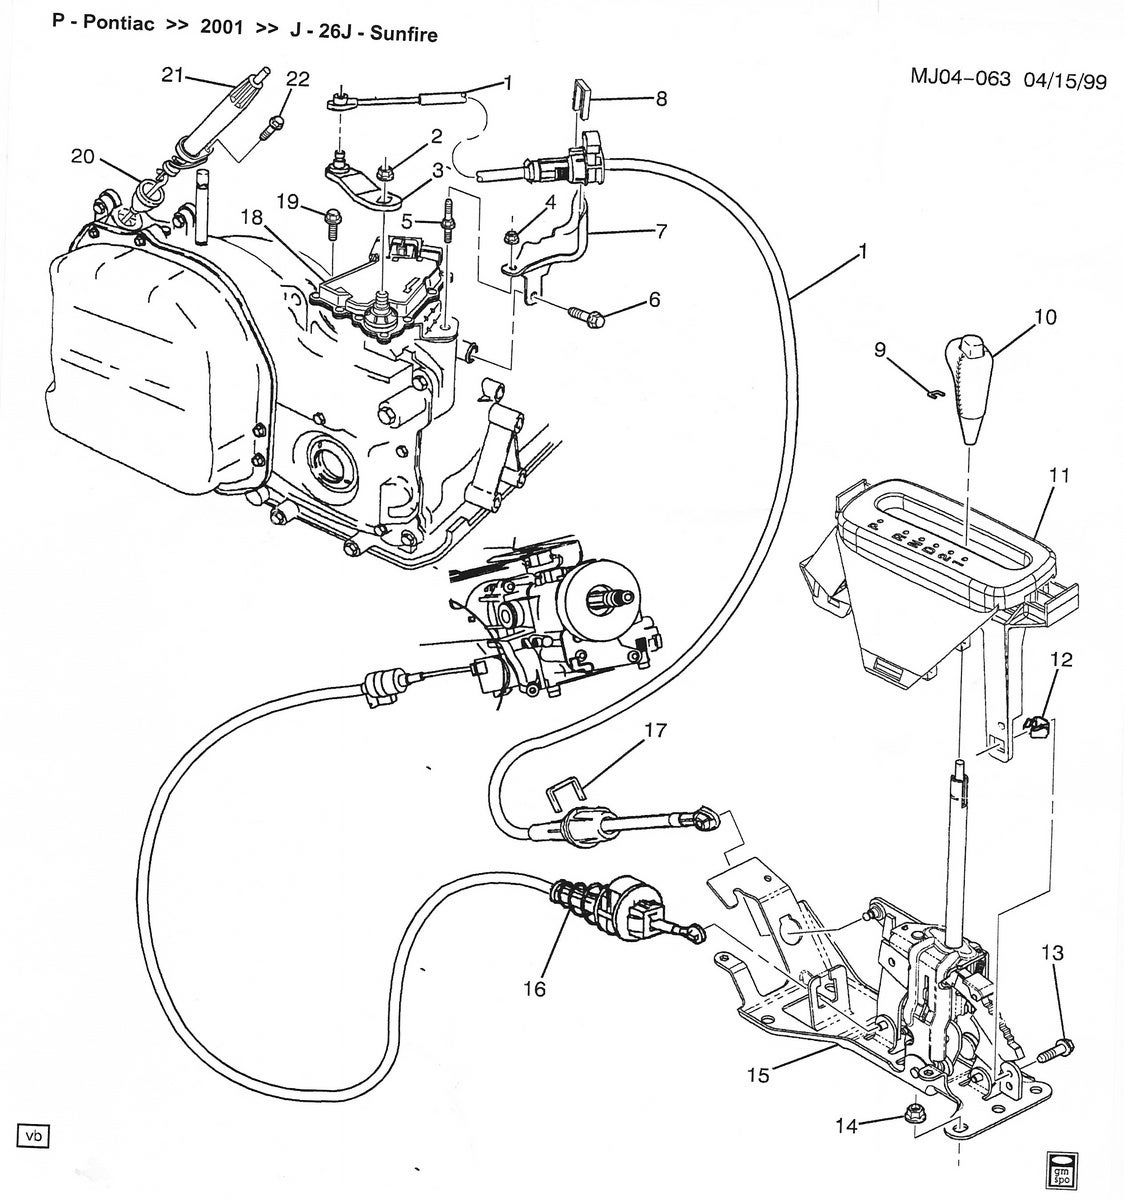 Nissan sentra clutch pedal sticking #6